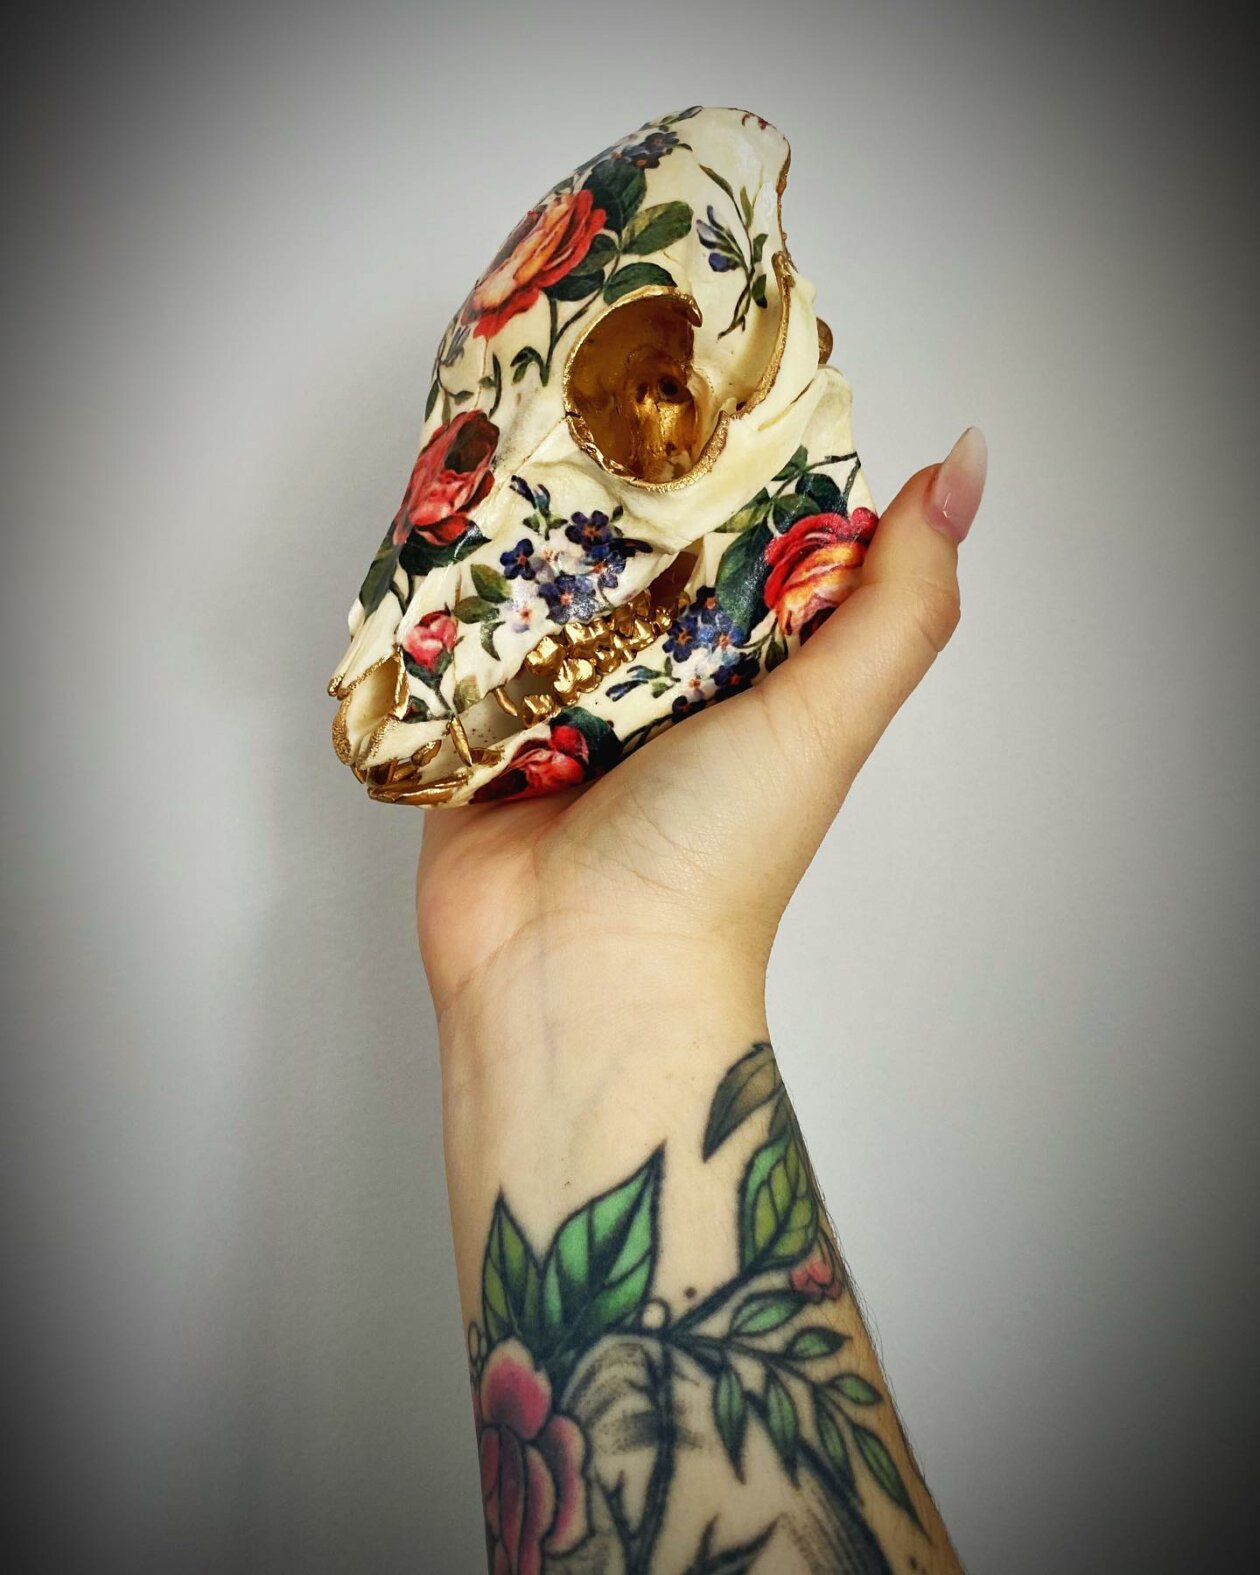 The Floral Decorated Bone And Skull Art Of Emmanuelle Jobidon (10)